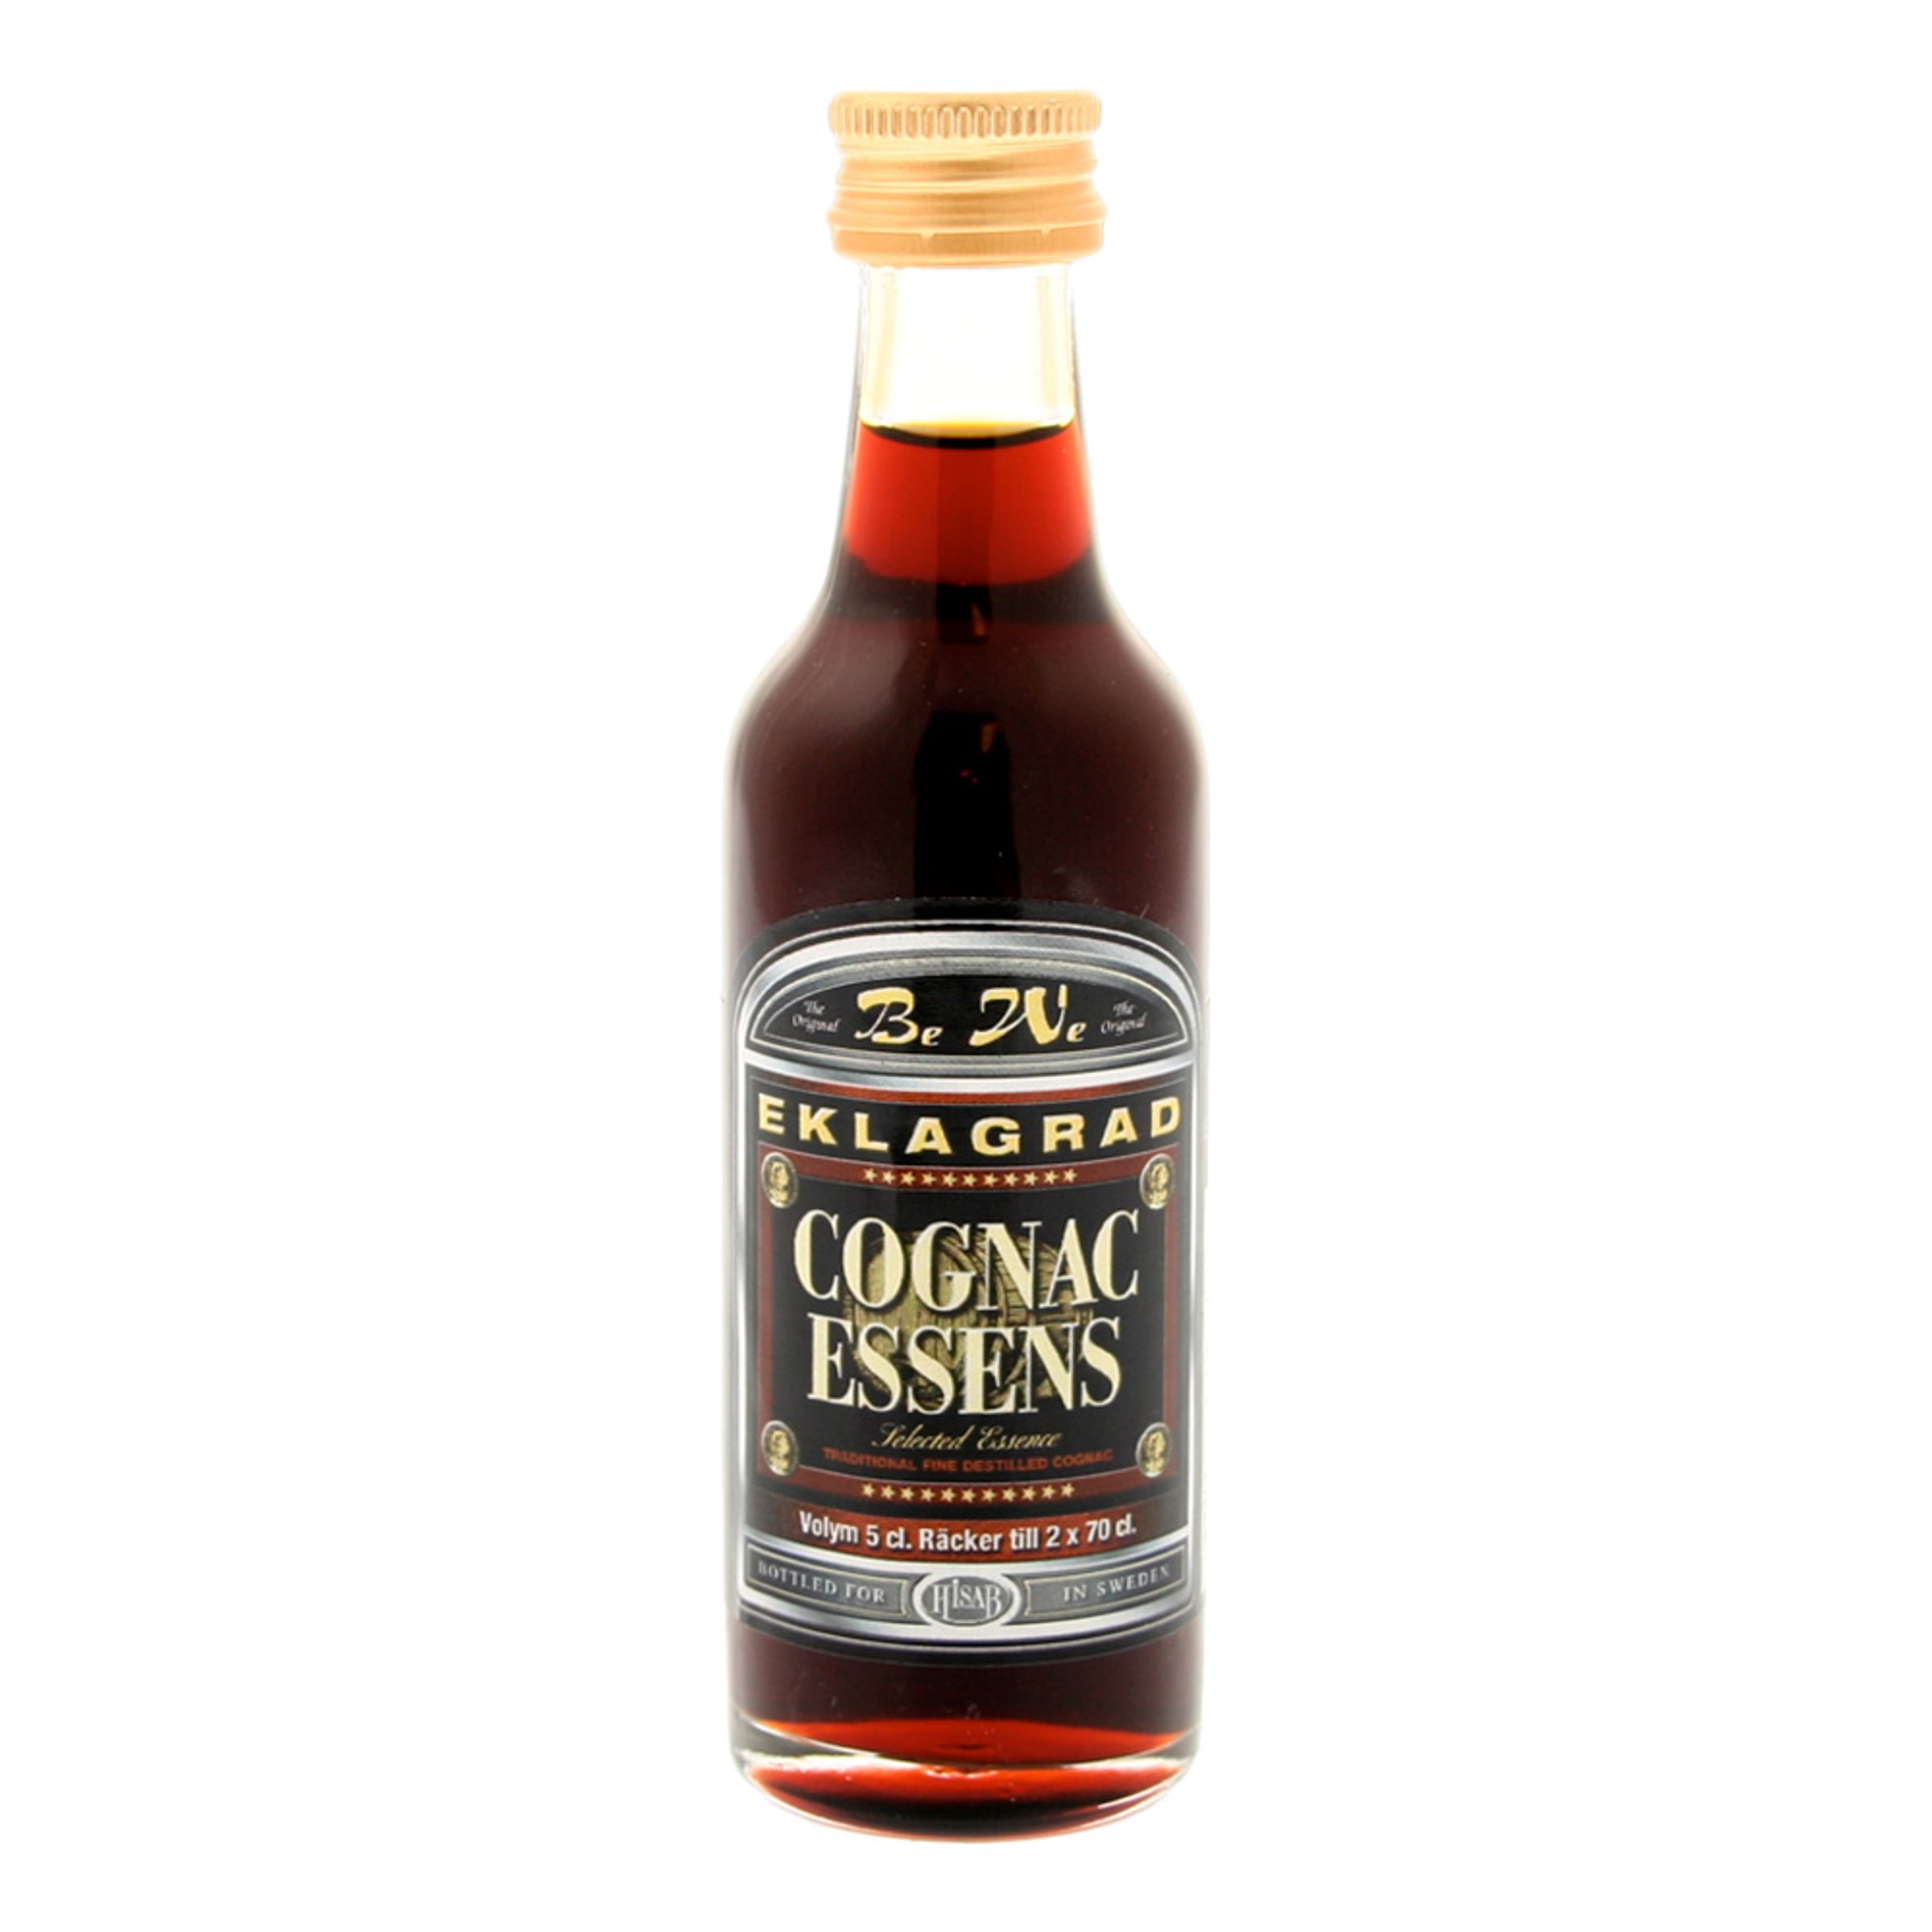 Eklagrad Cognac Essens